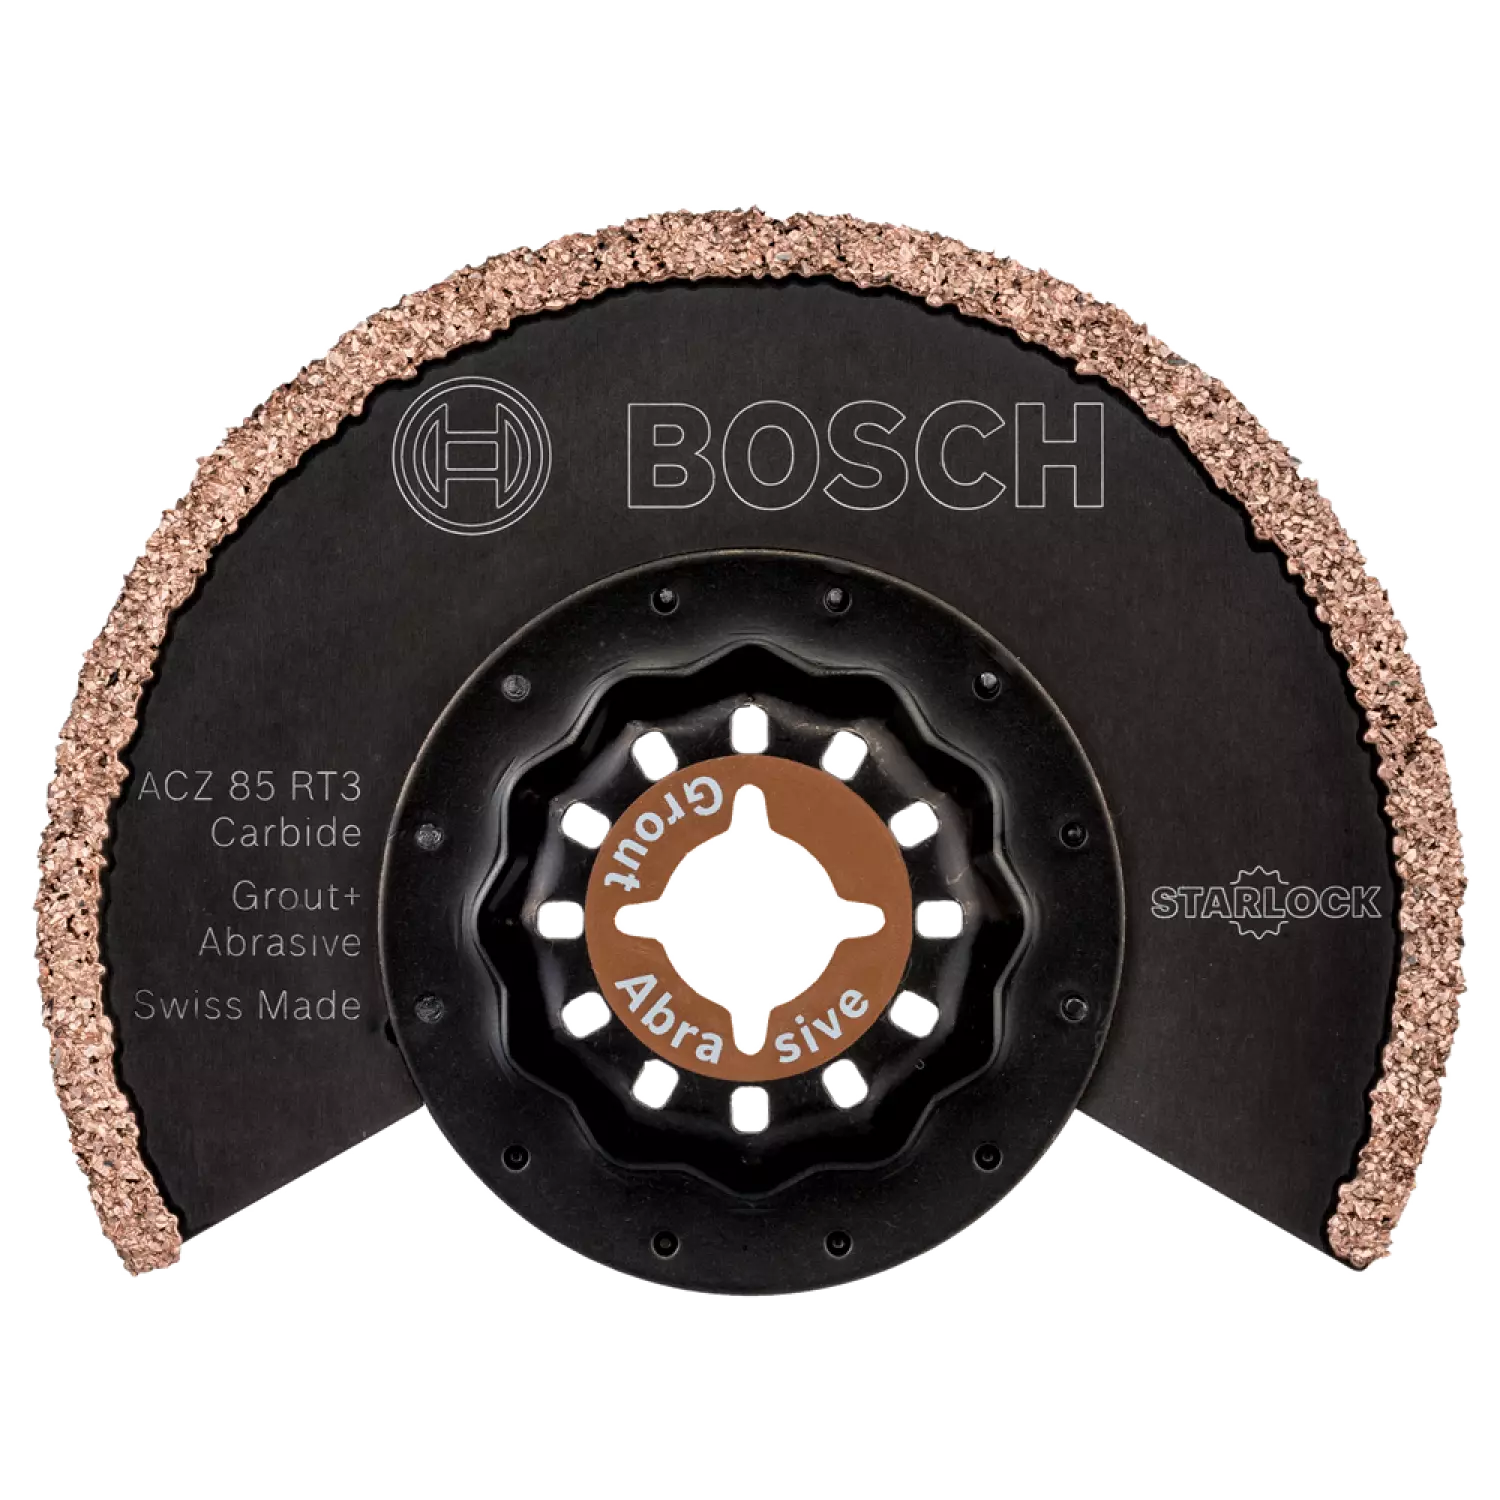 Bosch 2608661642 - Starlock ACZ 85 RT3 Carbide, Grout+Abrasive 85-image